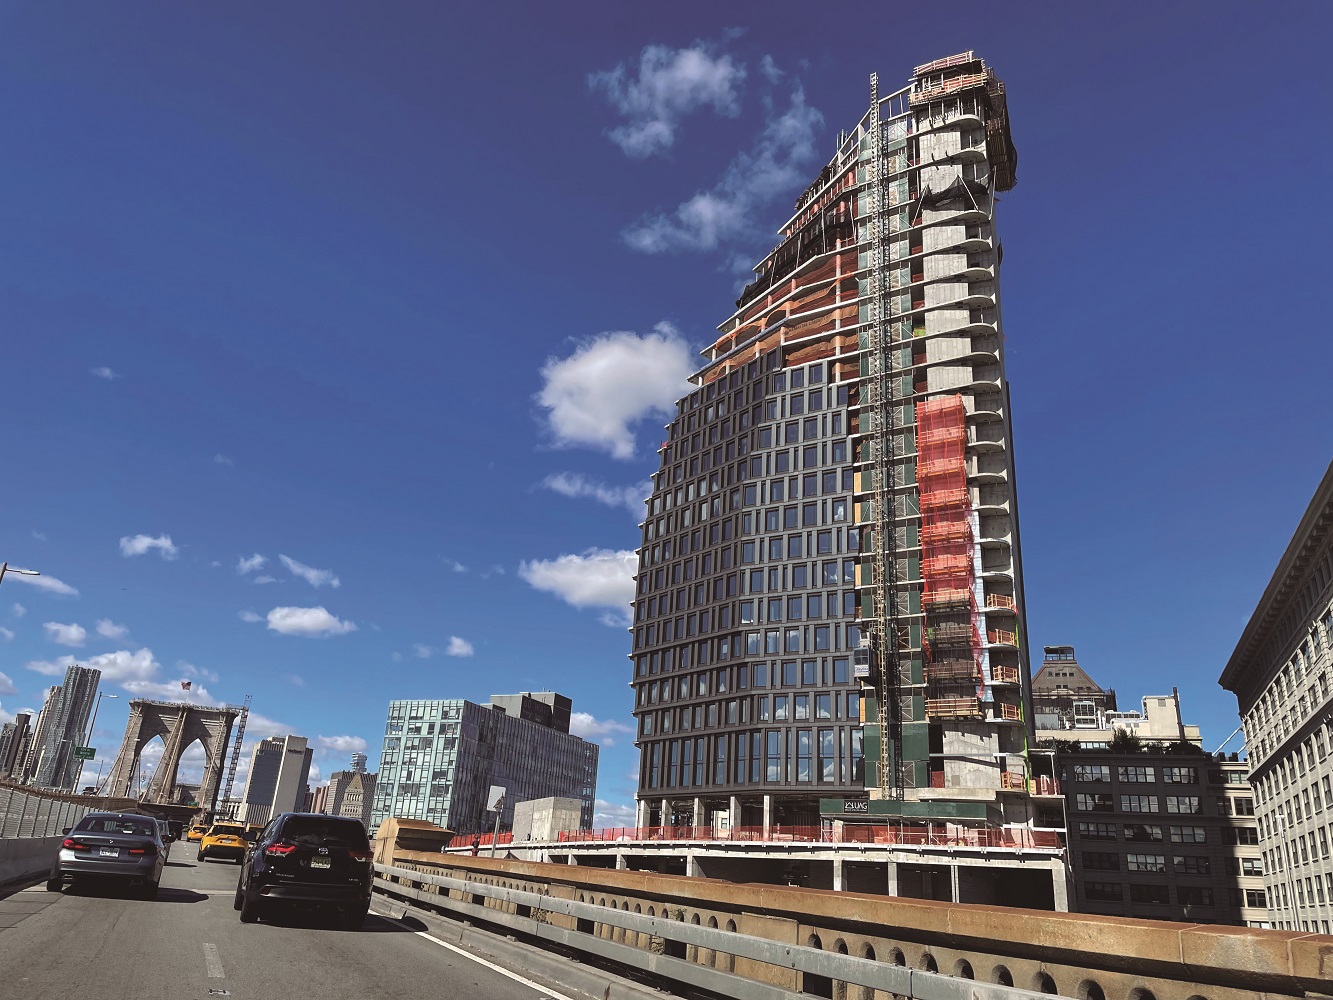 Convex Mixed‐Use Building Rises Next to The Brooklyn Bridge